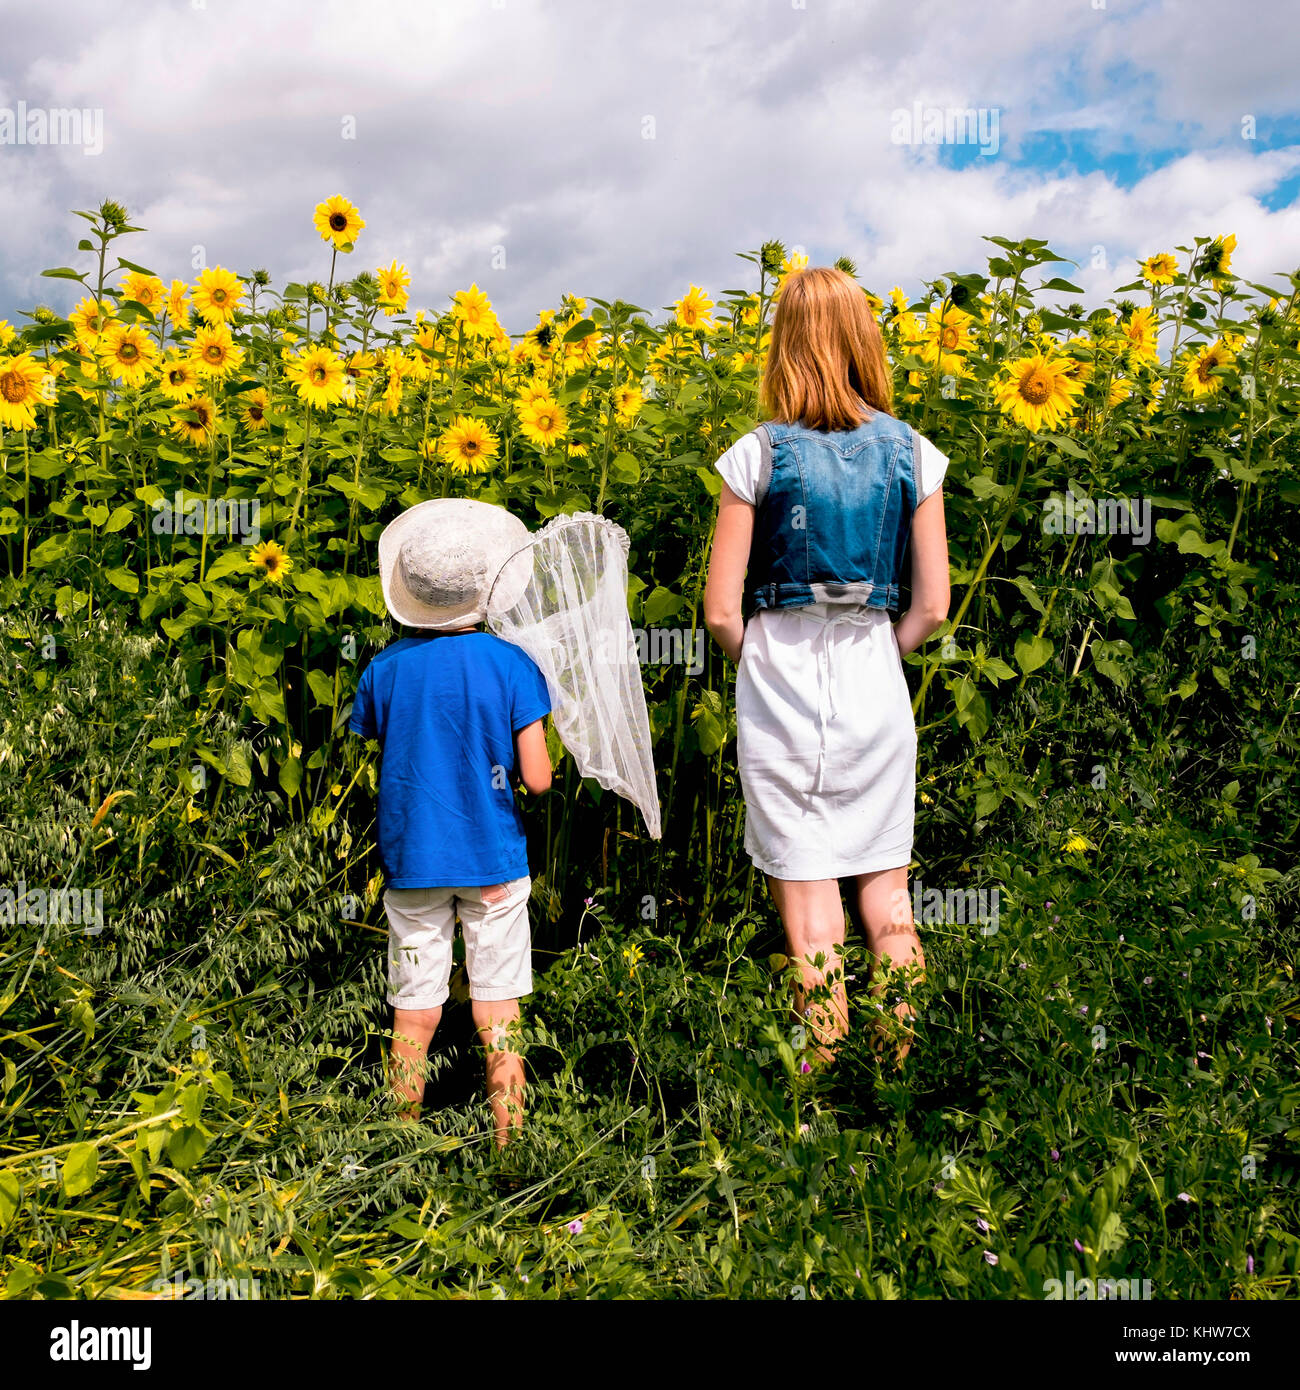 Madre e hijo de pie en el campo de girasoles, hijo celebración Mariposa neto, vista trasera, Sverdlovsk, Rusia, Europa Foto de stock